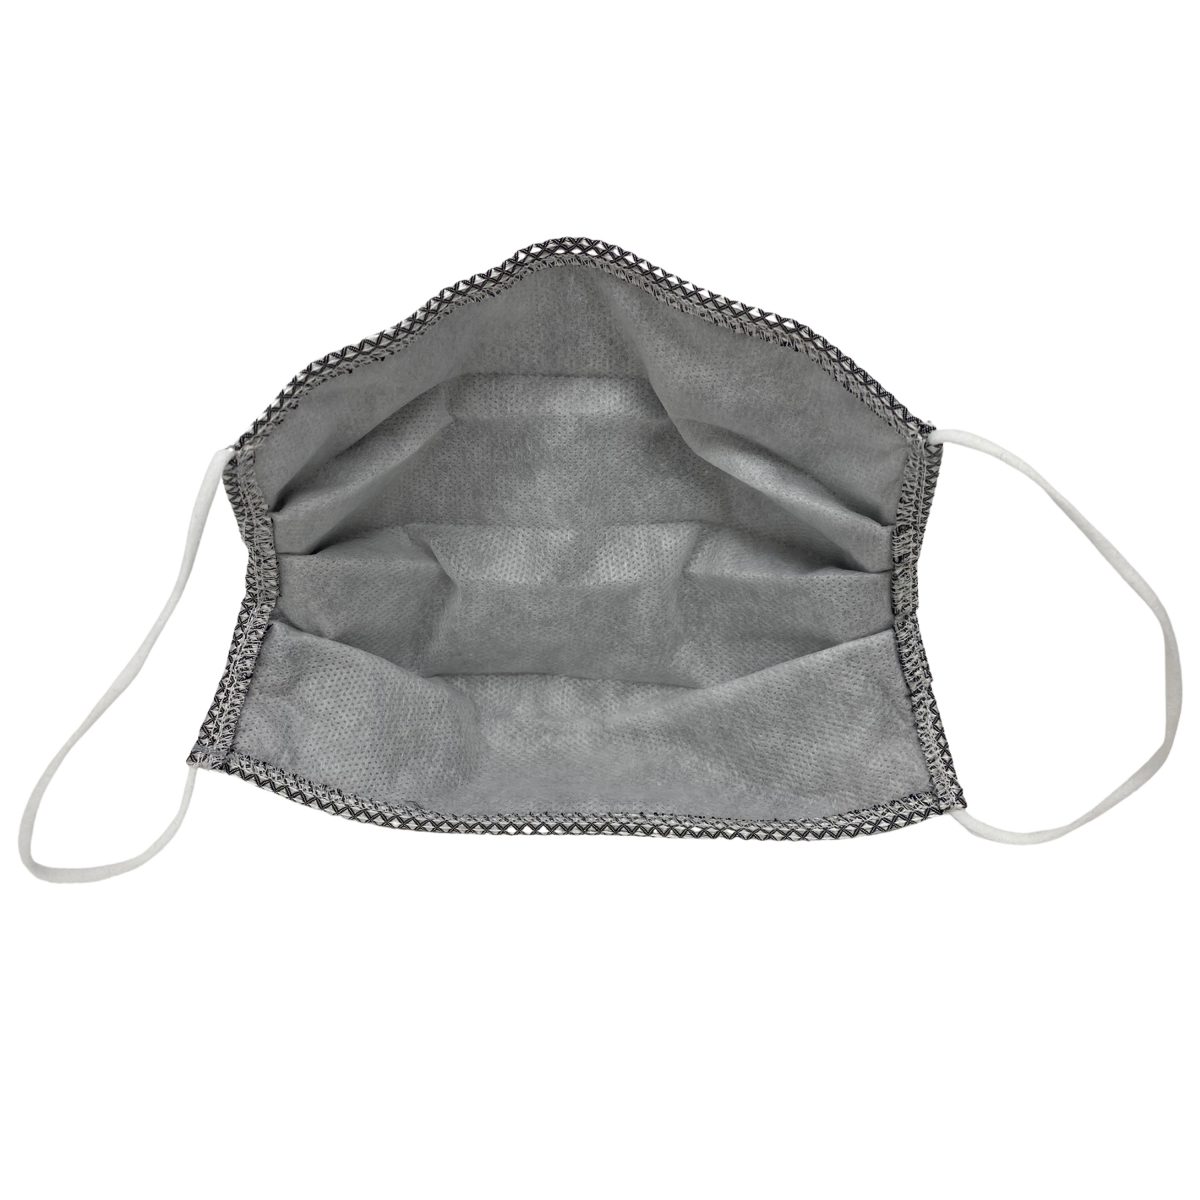 Fashion protective fabric mask, jacquard grey